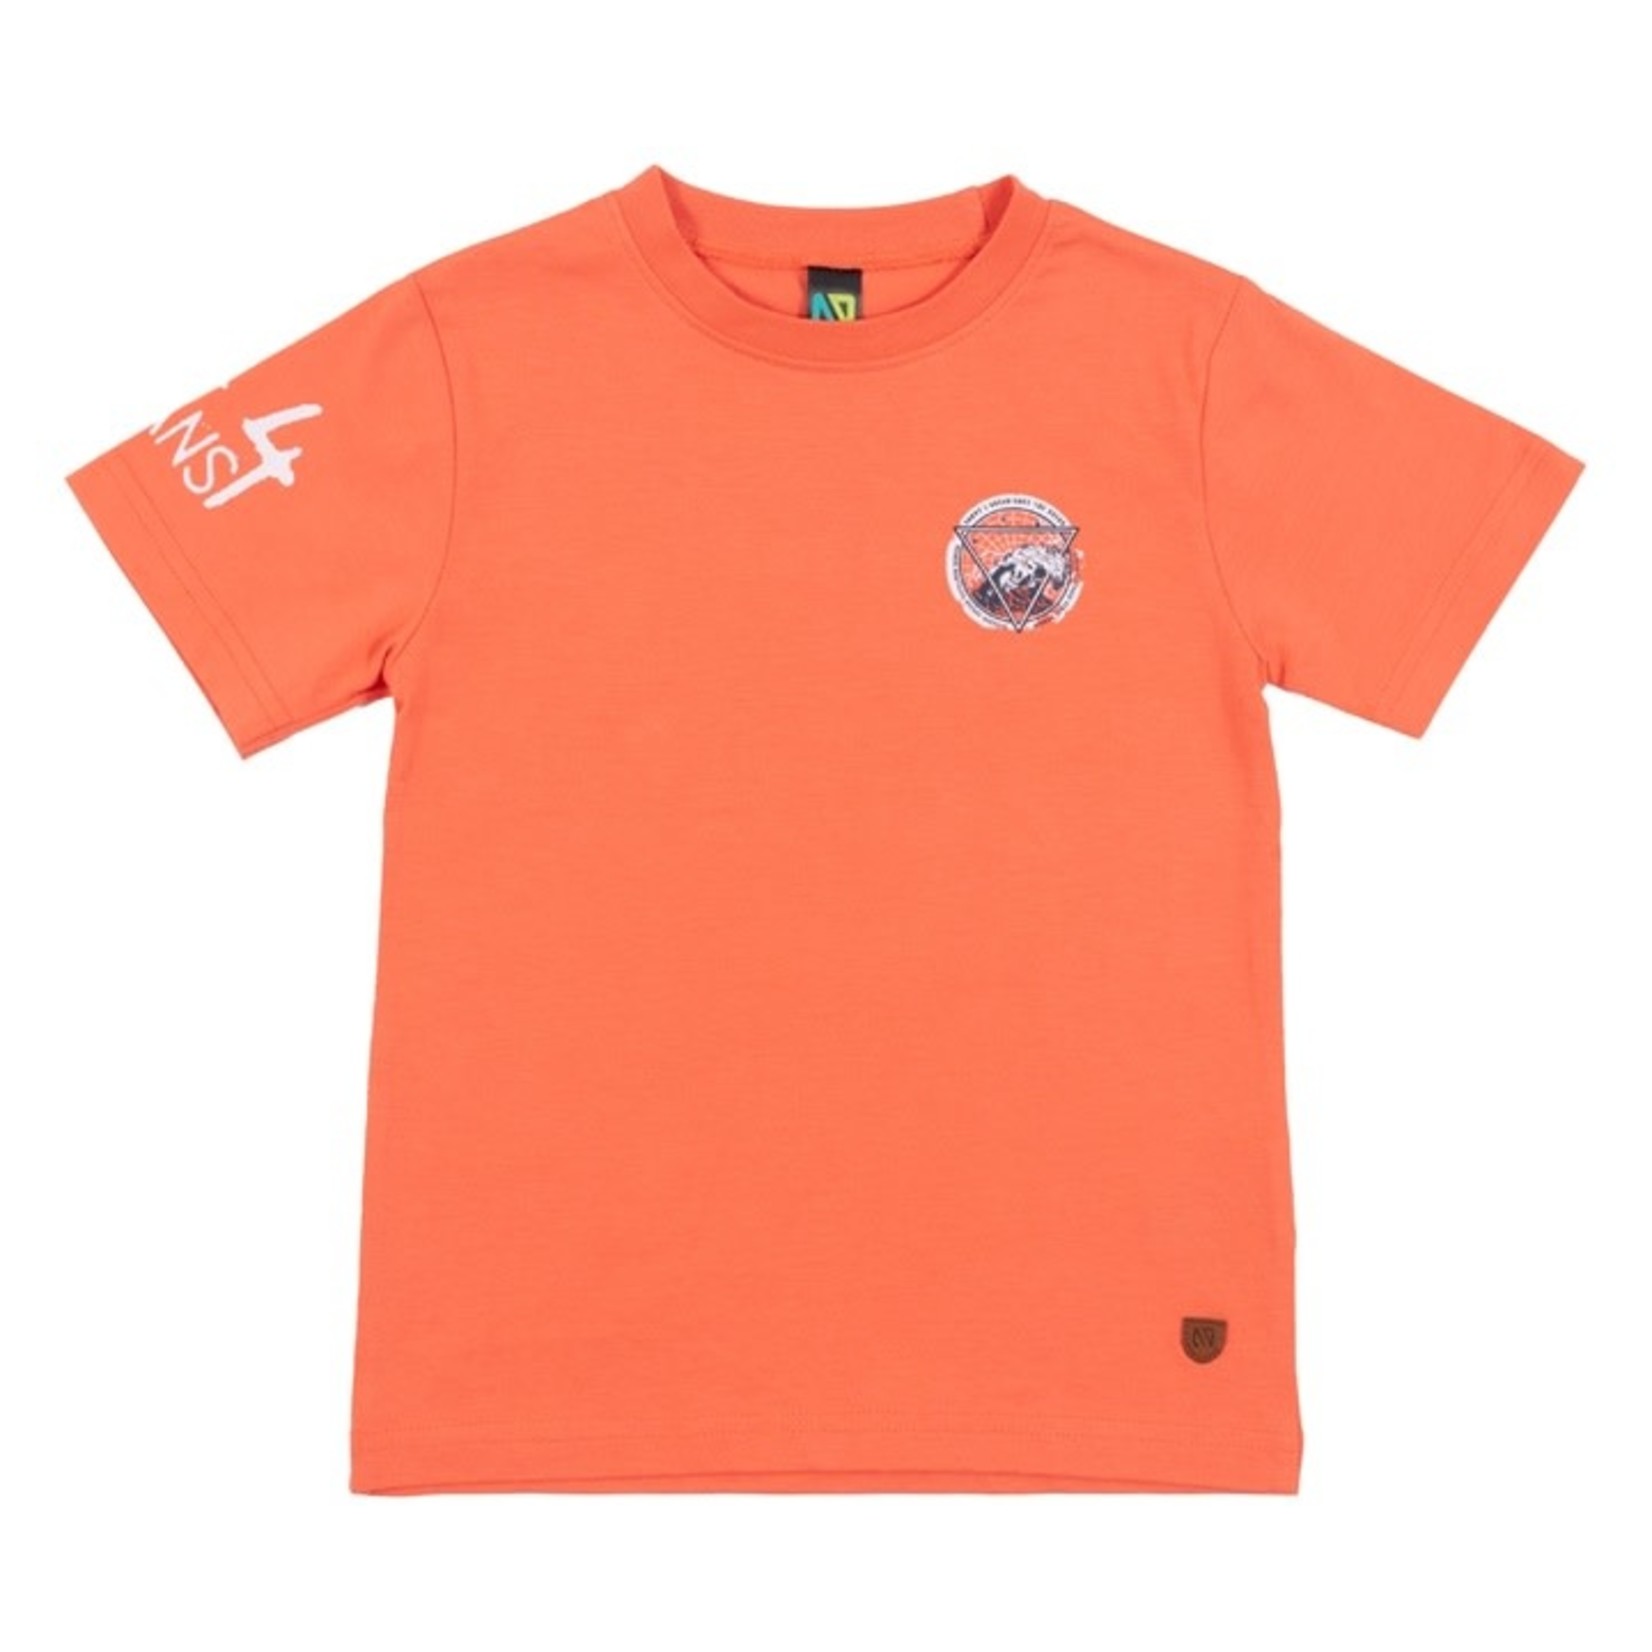 Nanö NANÖ - Orange Short-sleeved t-shirt 'Under the sea'